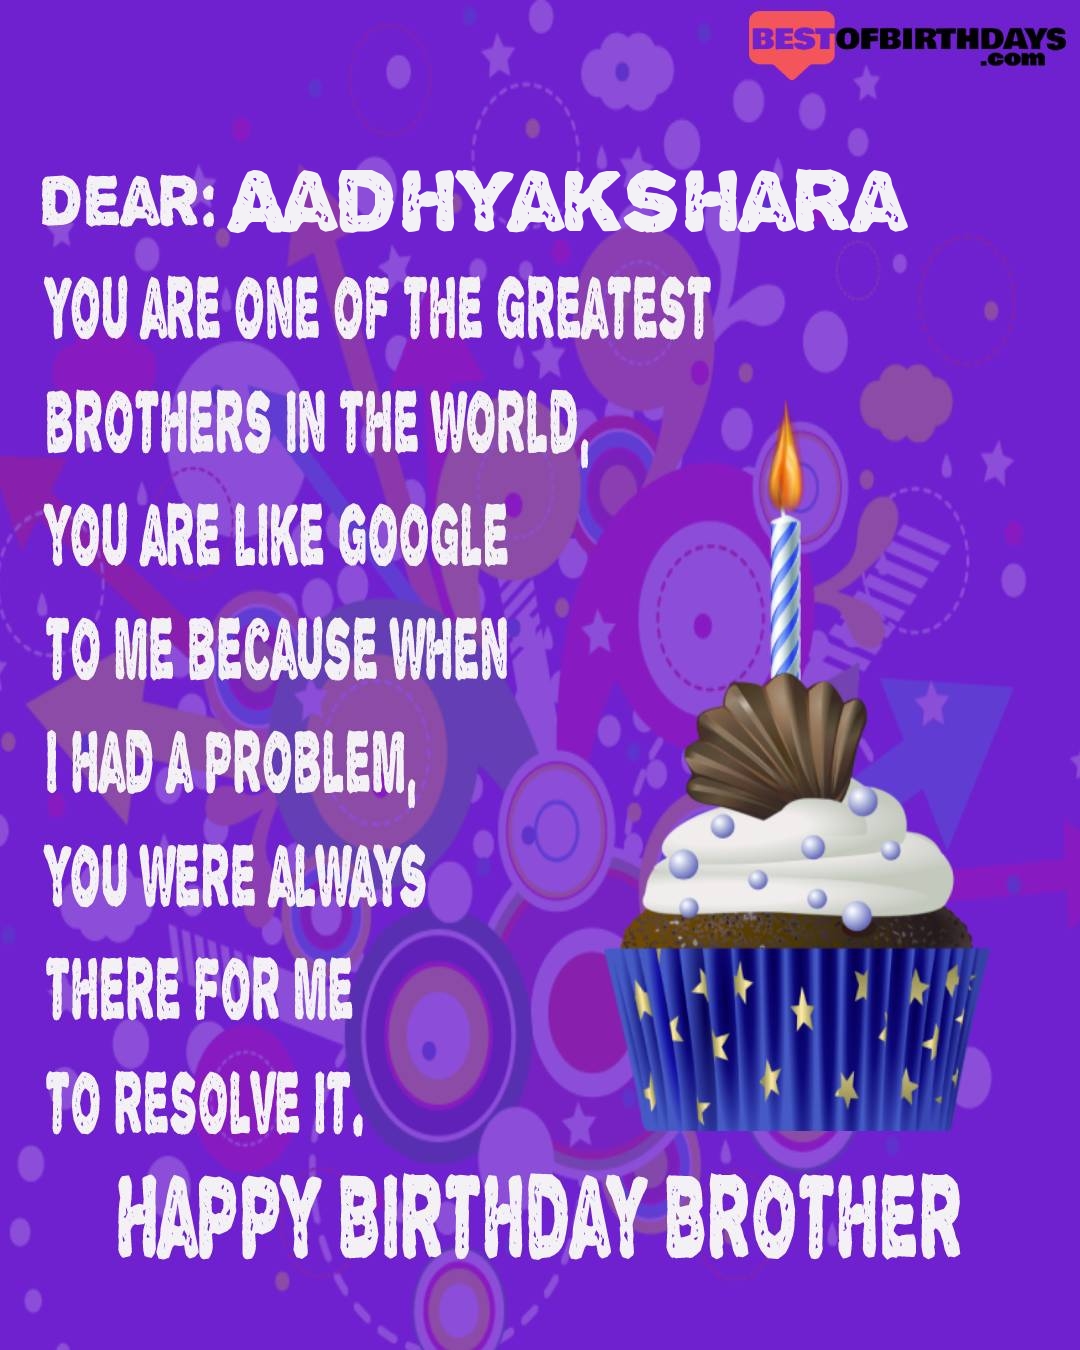 Happy birthday aadhyakshara bhai brother bro